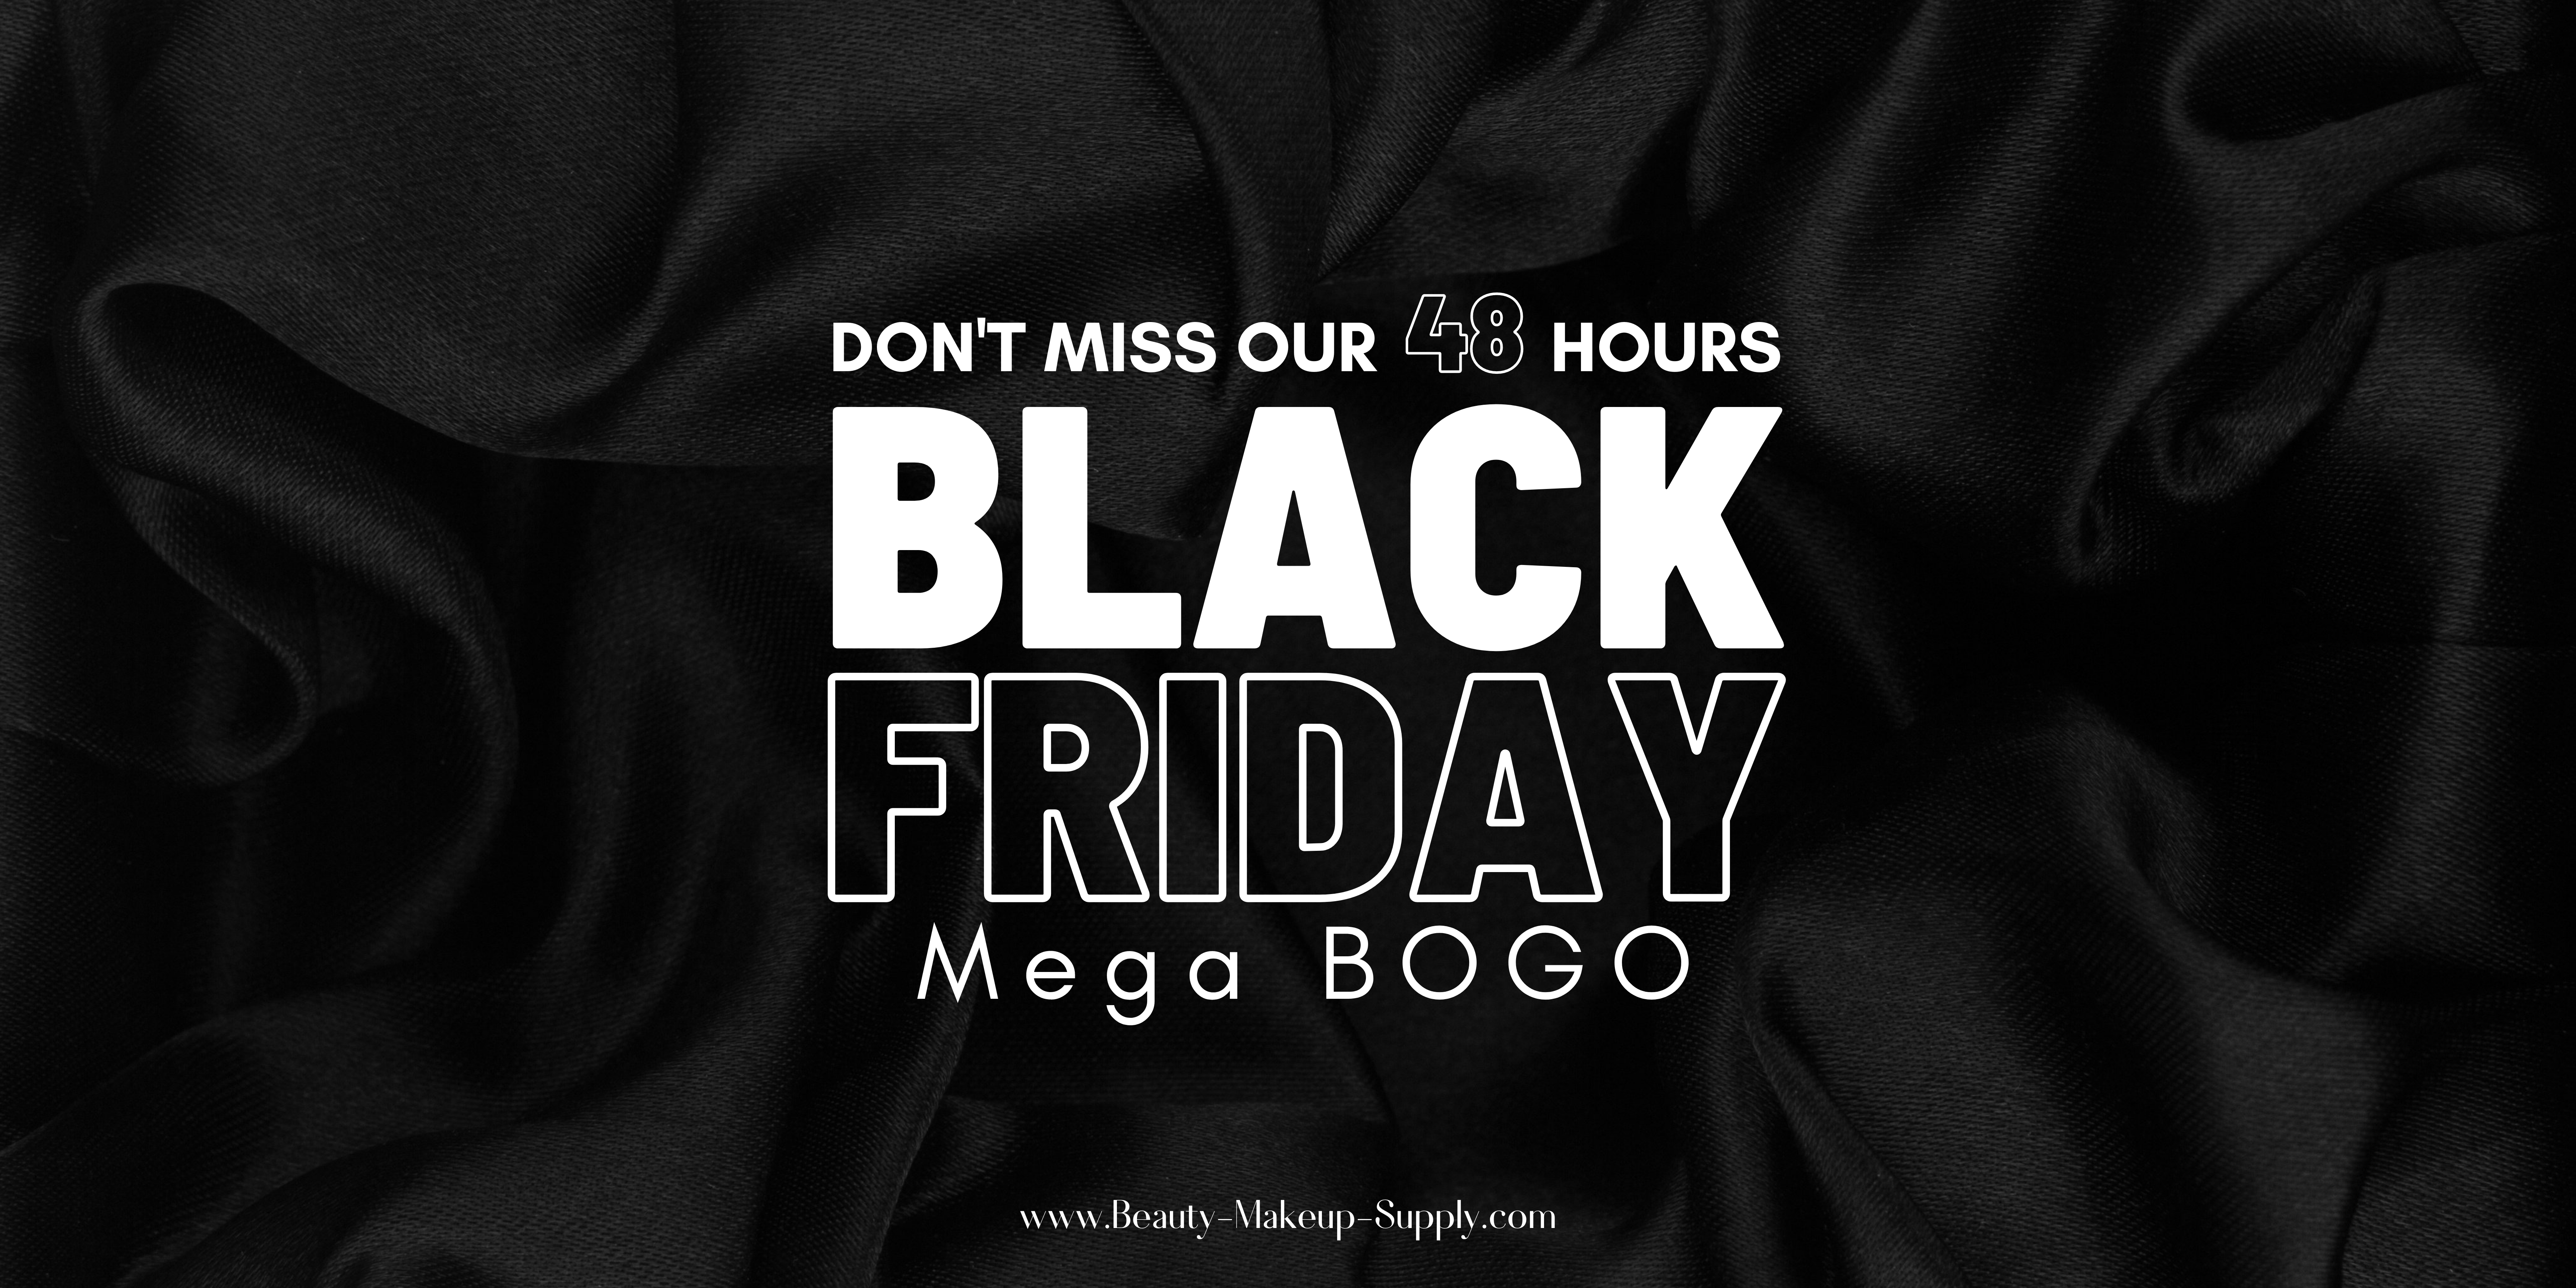 Black Friday Monday Mega BOGO at www.Beauty-Makeup-Supply.com - Makeup